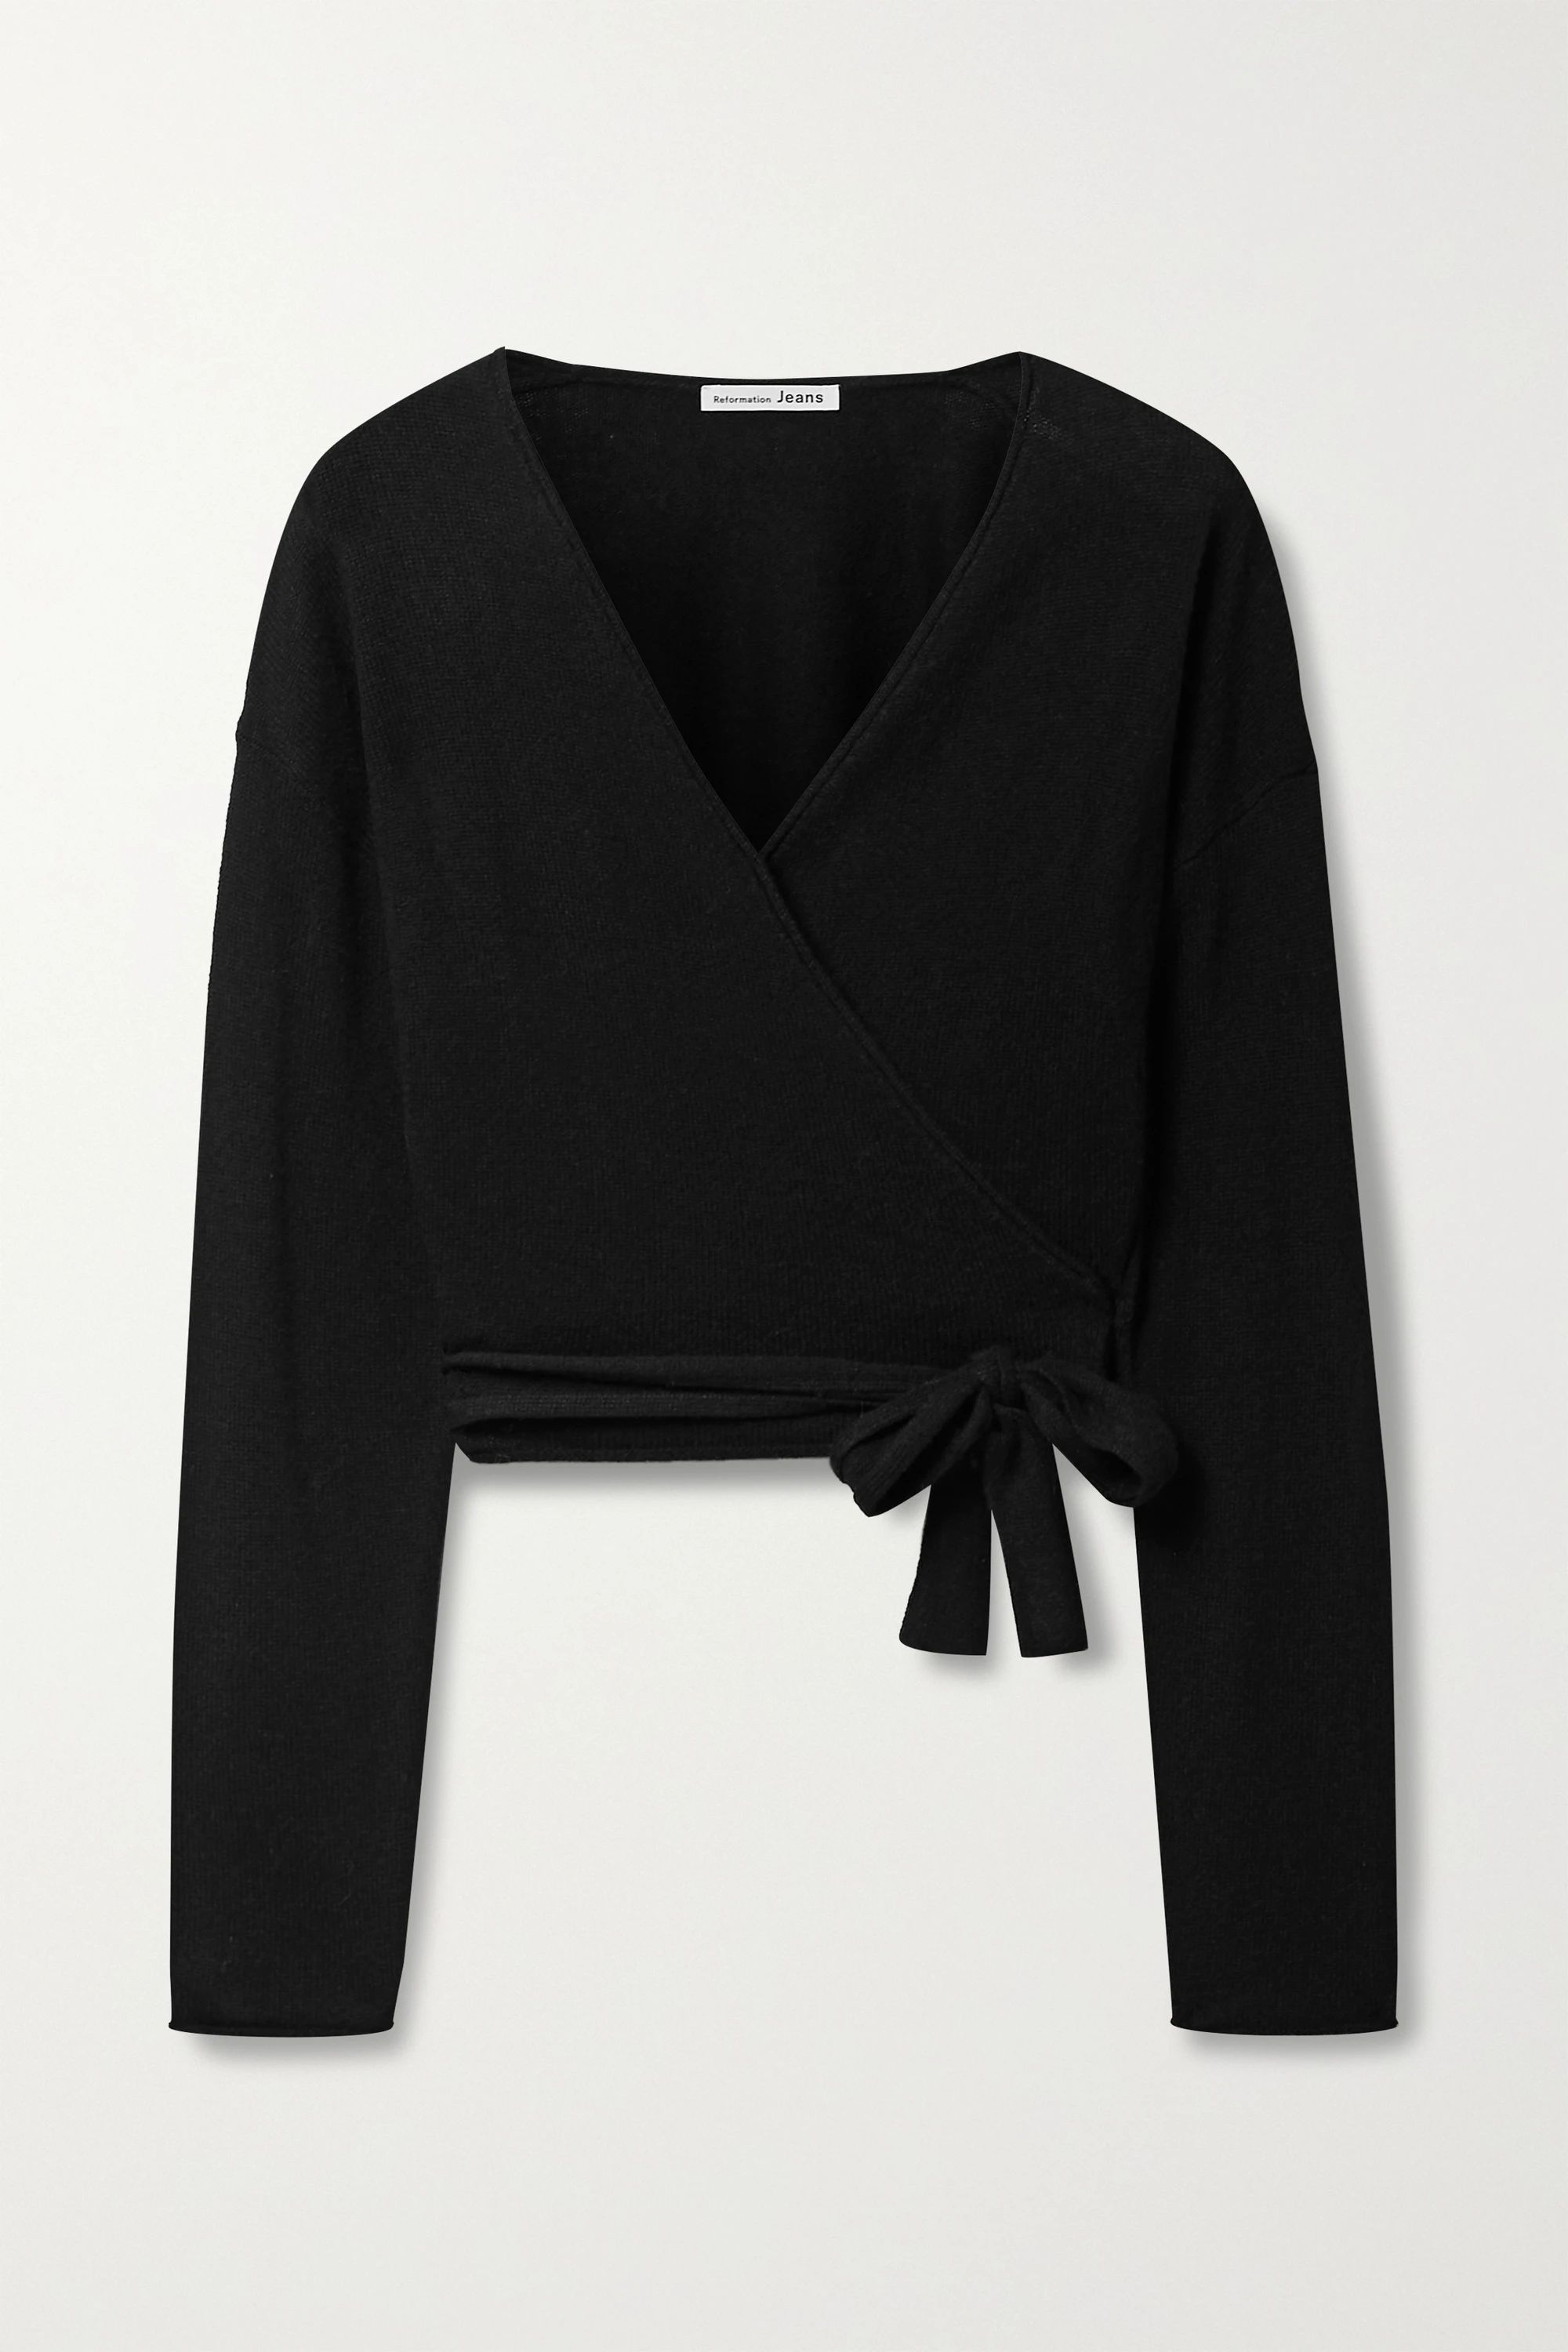 Black + NET SUSTAIN cropped cashmere wrap top | Reformation | NET-A-PORTER | NET-A-PORTER (US)